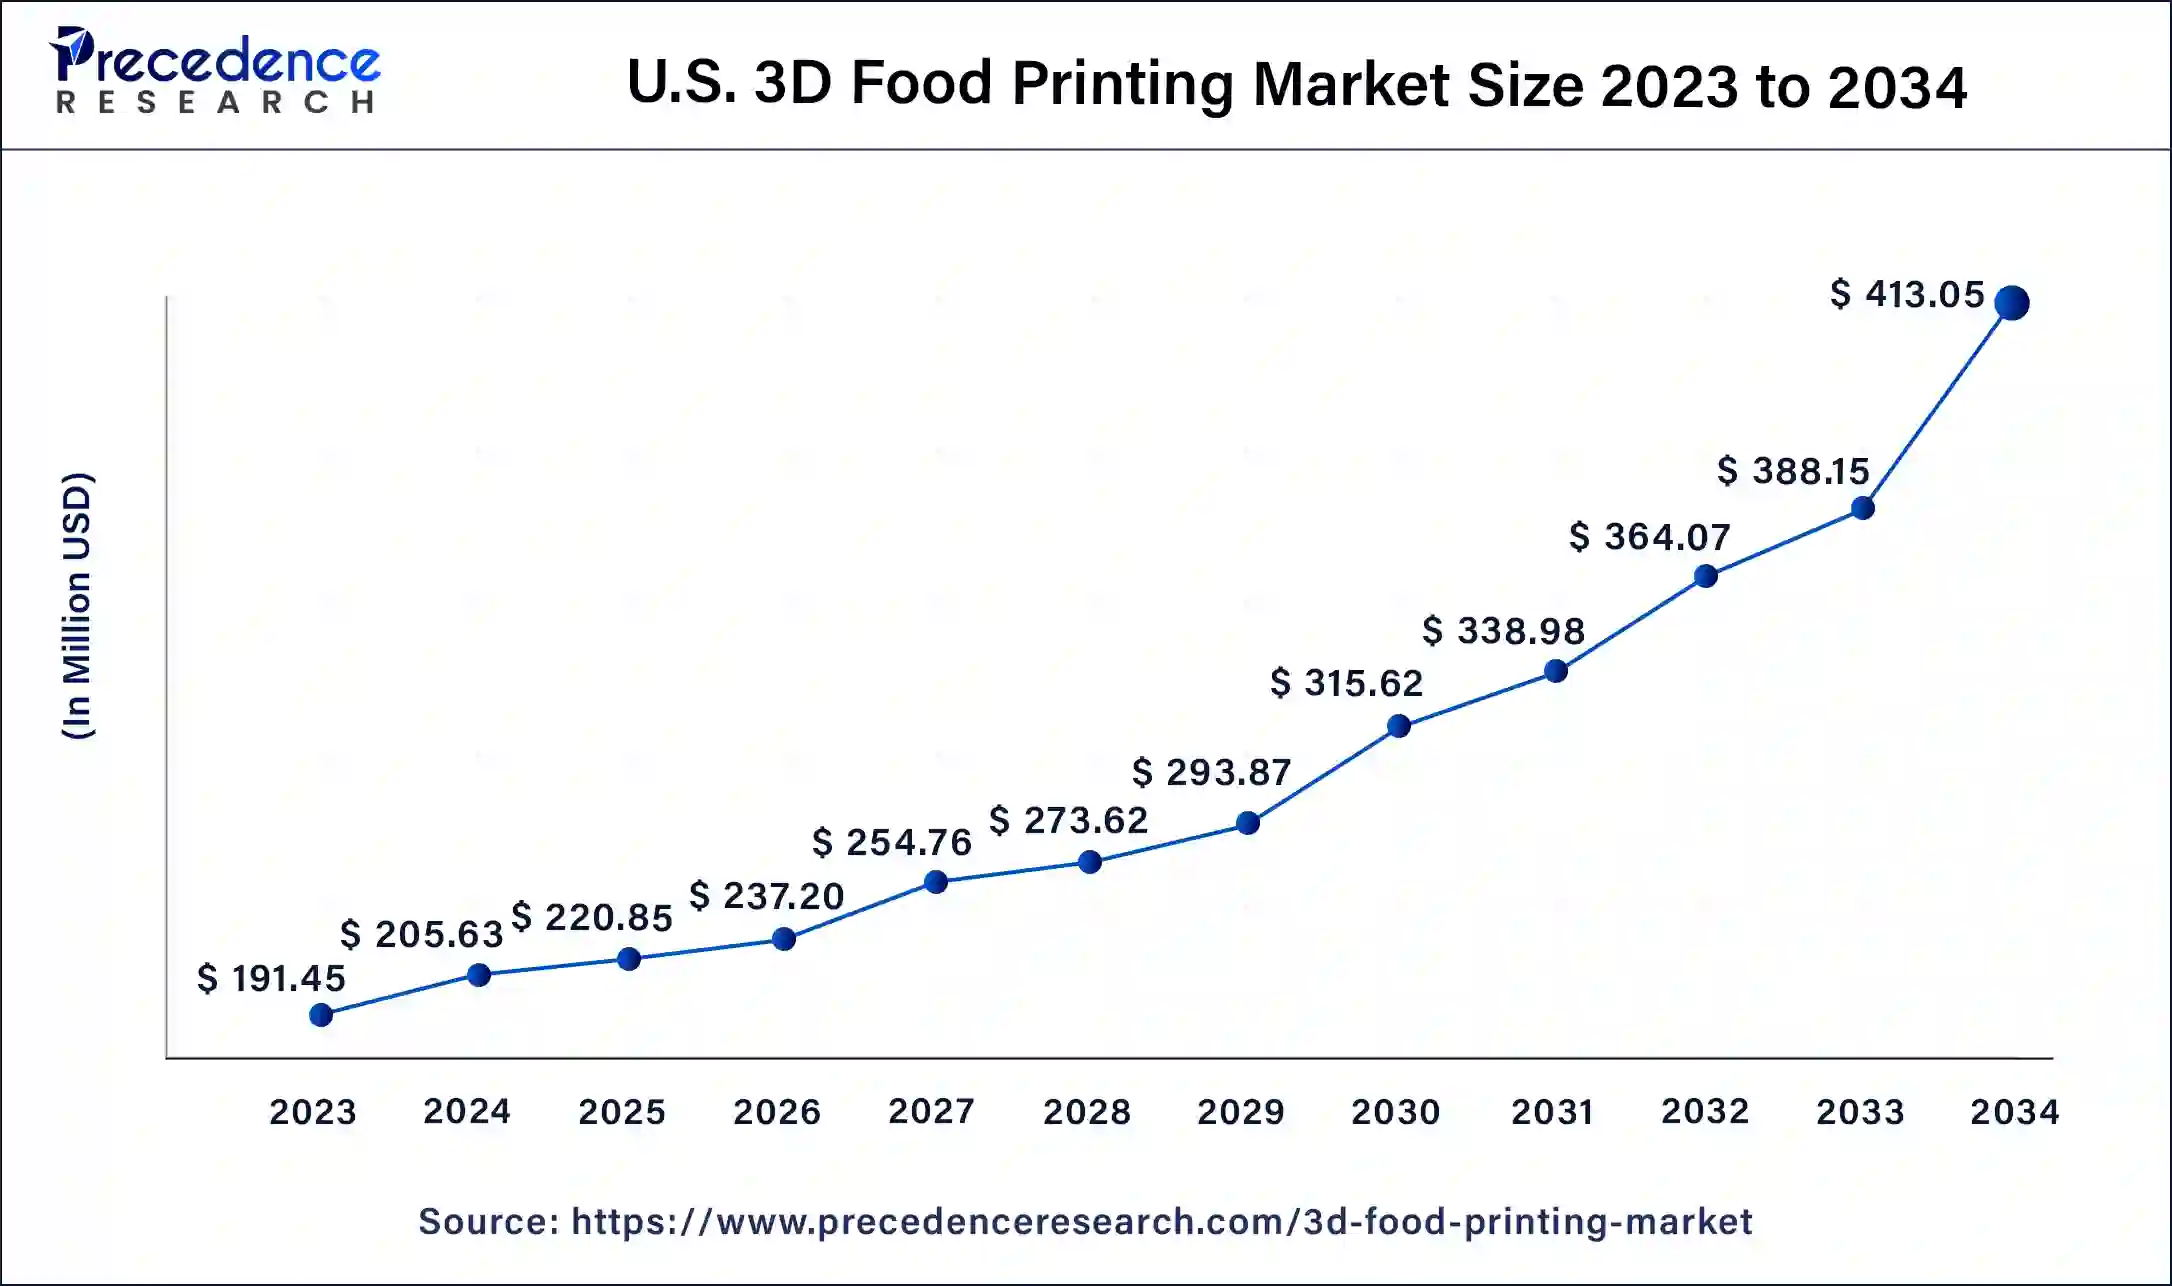 U.S. 3D Food Printing Market Size 2024 To 2034